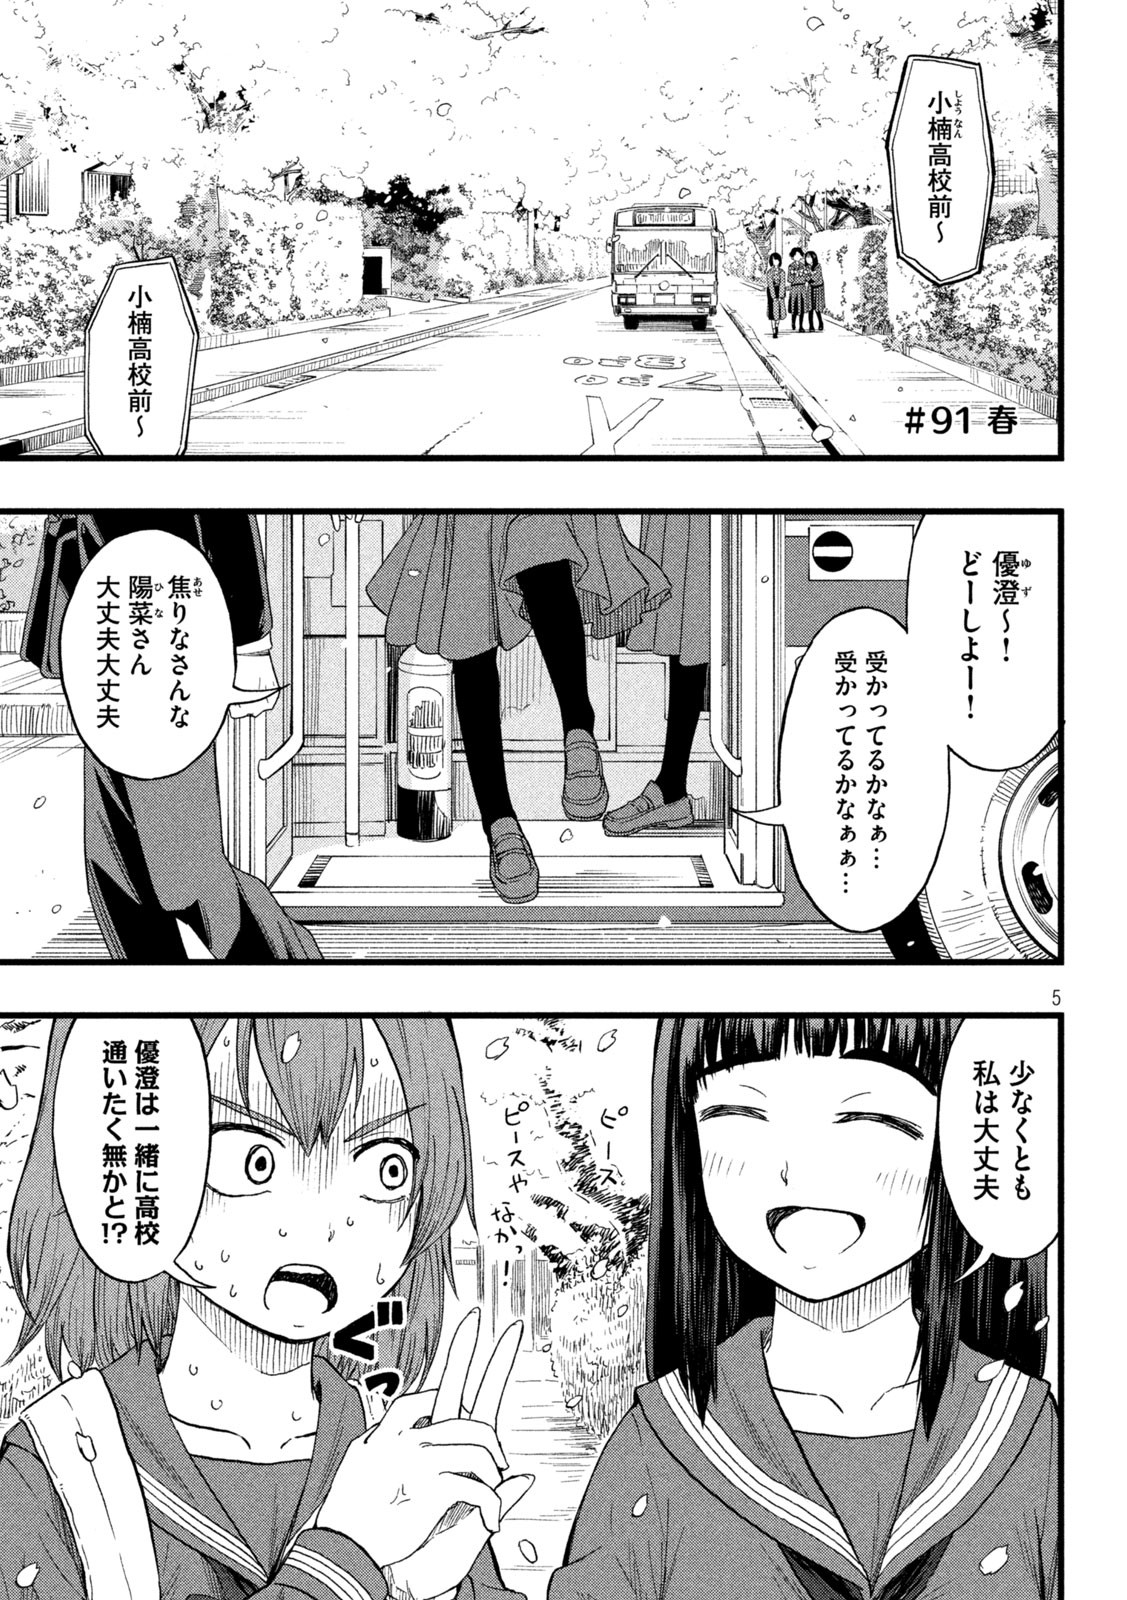 Koharu haru! - Chapter 91 - Page 1